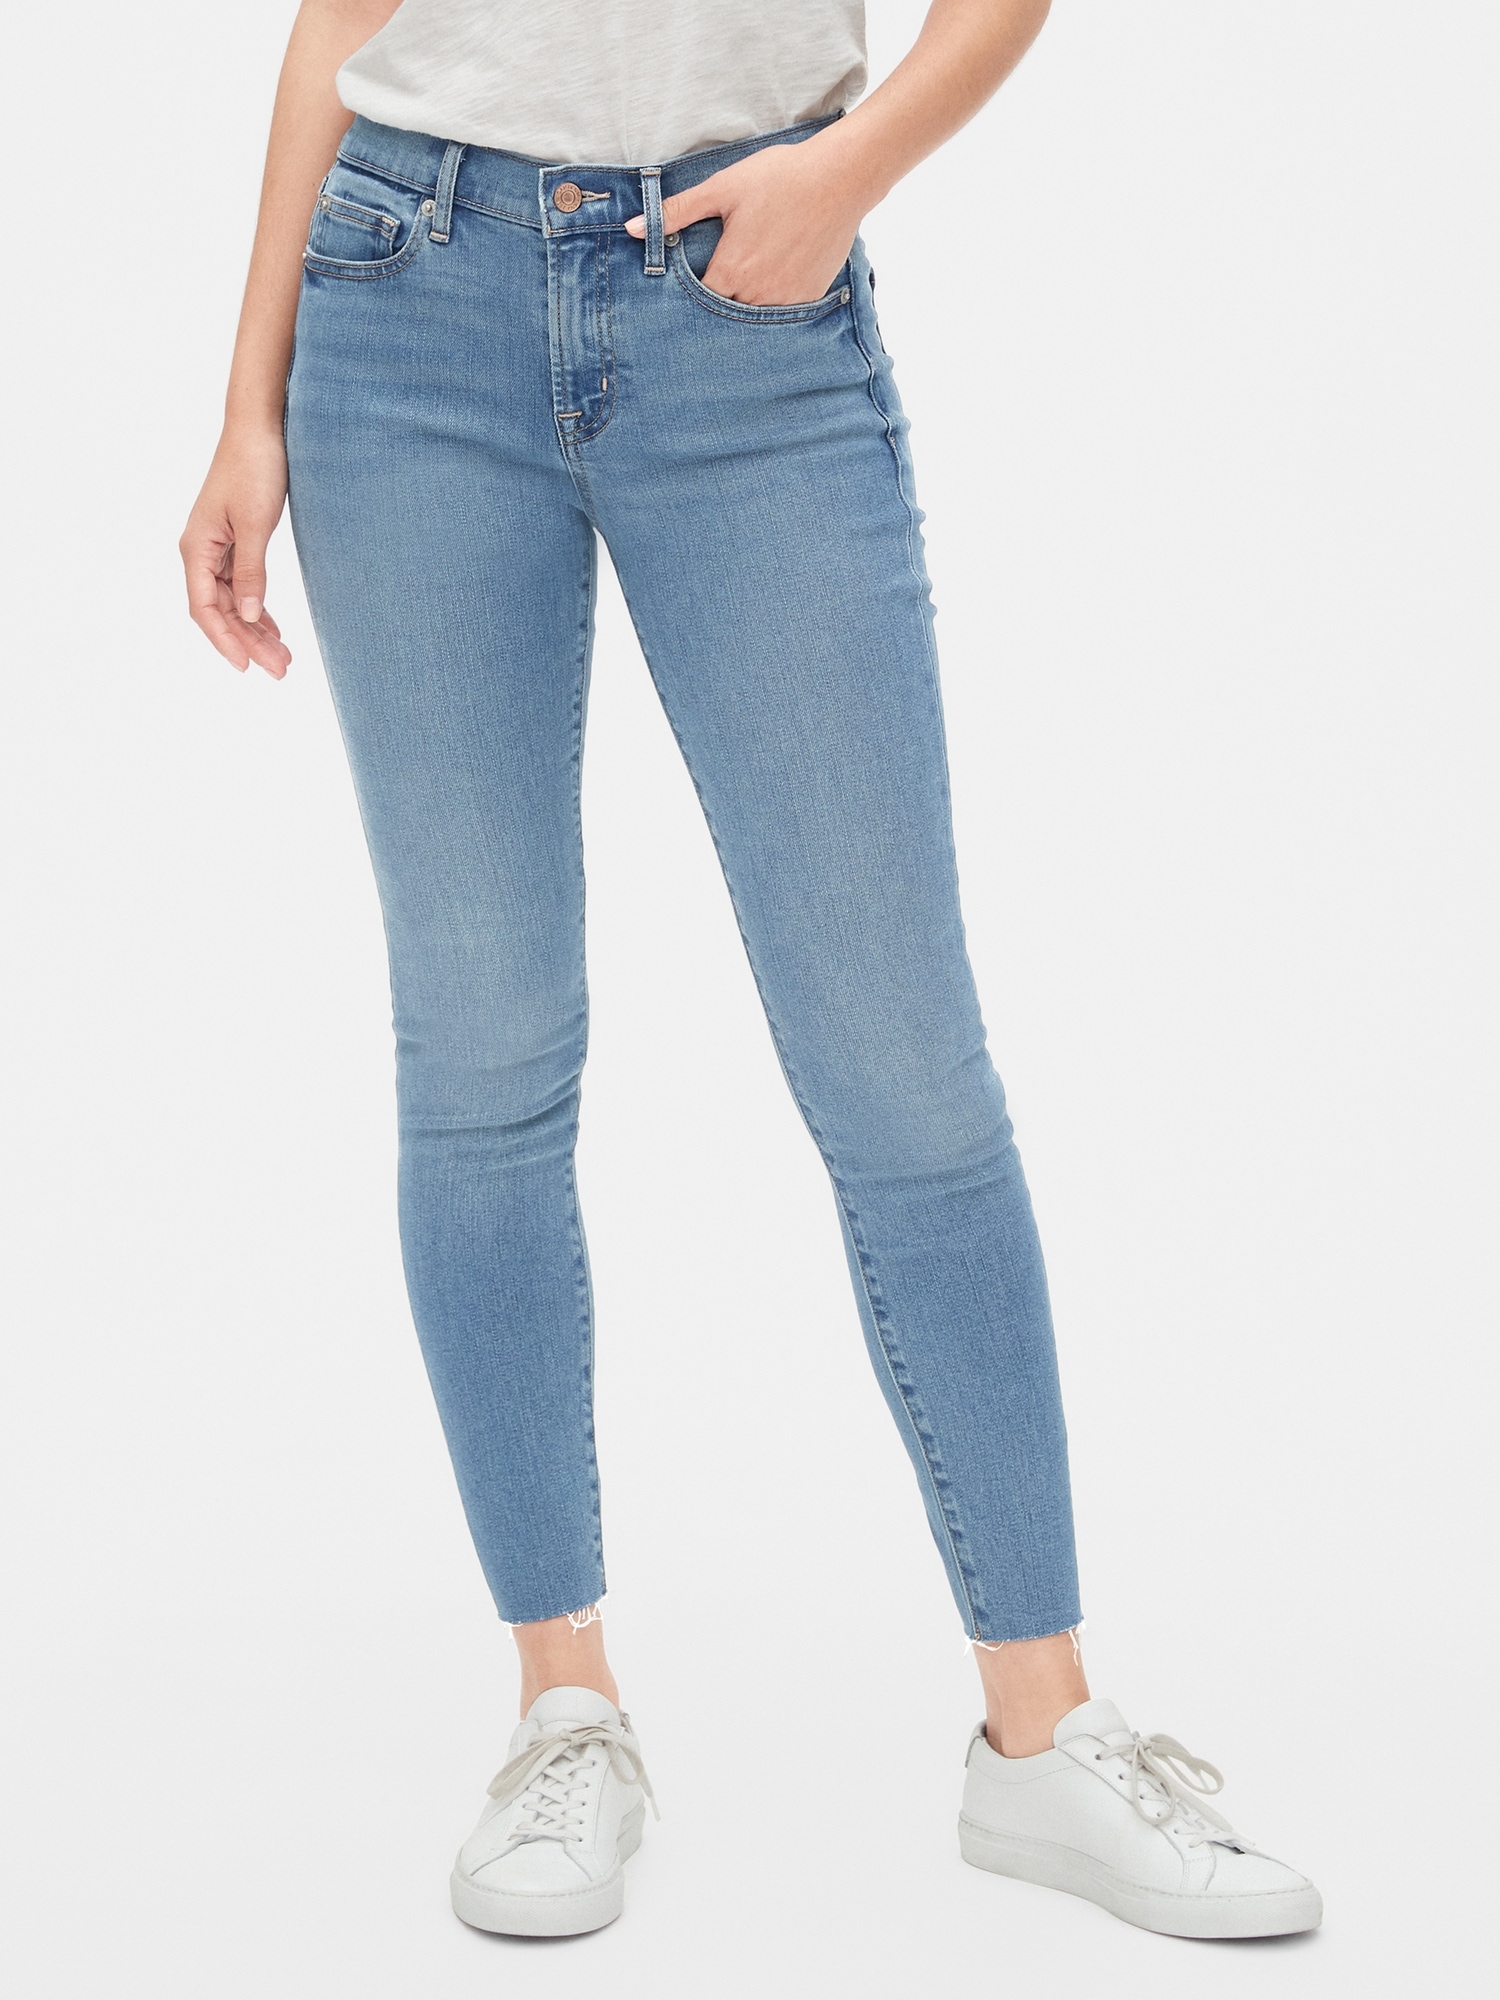 gap slim stretch jeans